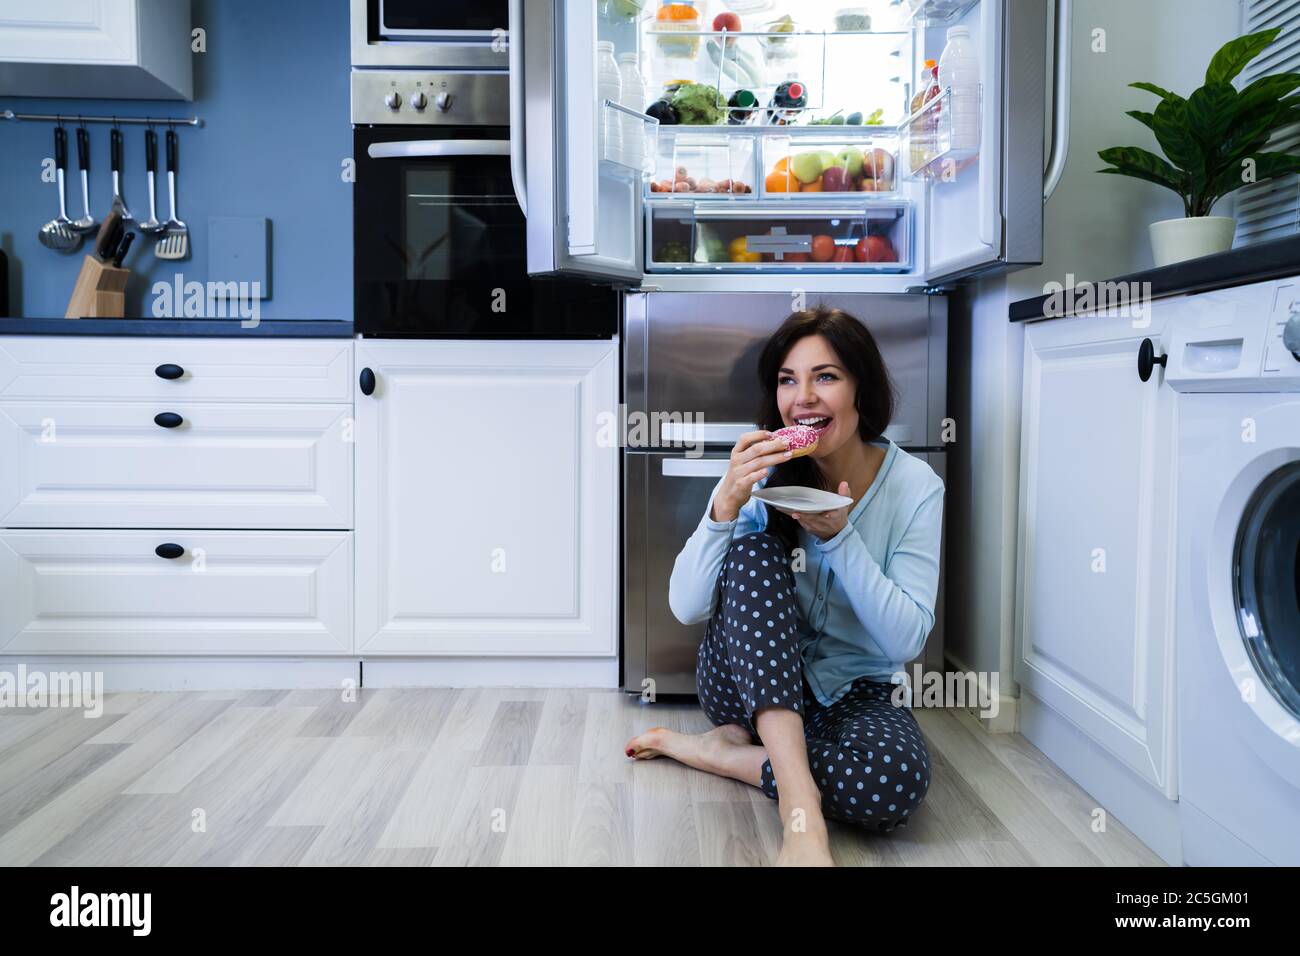 Open Night Sweet Indulgence. Woman Eating Near Refrigerator Stock Photo